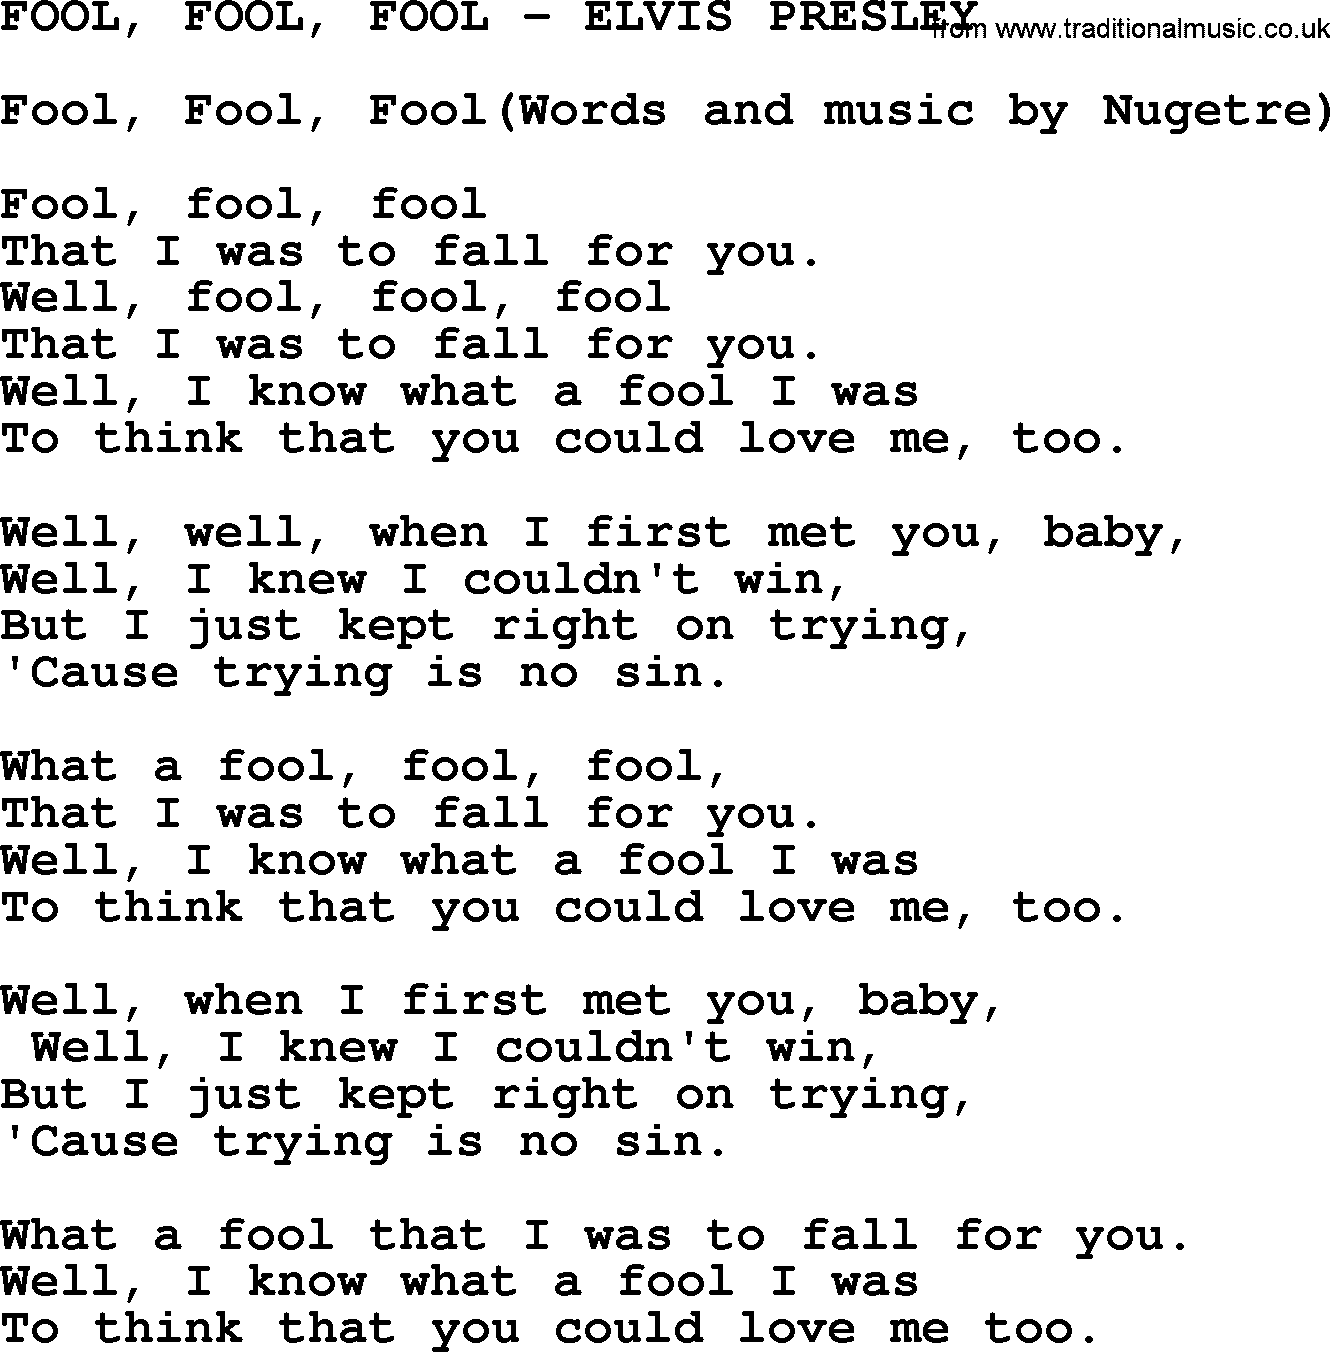 Elvis Presley song: Fool, Fool, Fool-Elvis Presley-.txt lyrics and chords